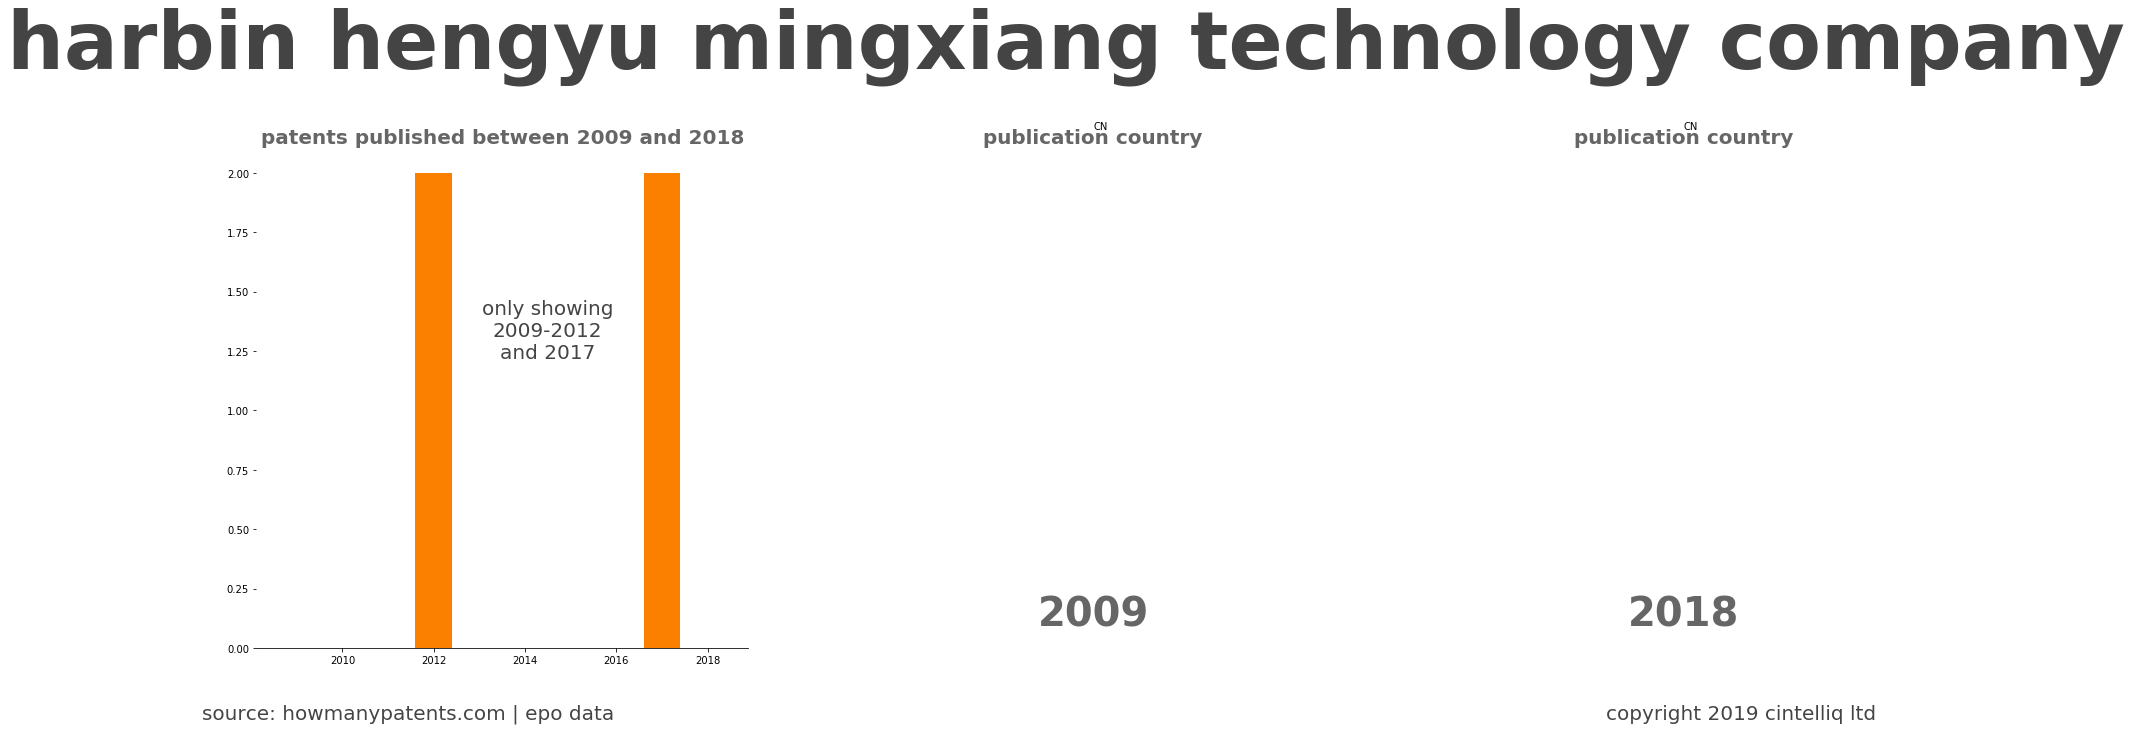 summary of patents for Harbin Hengyu Mingxiang Technology Company